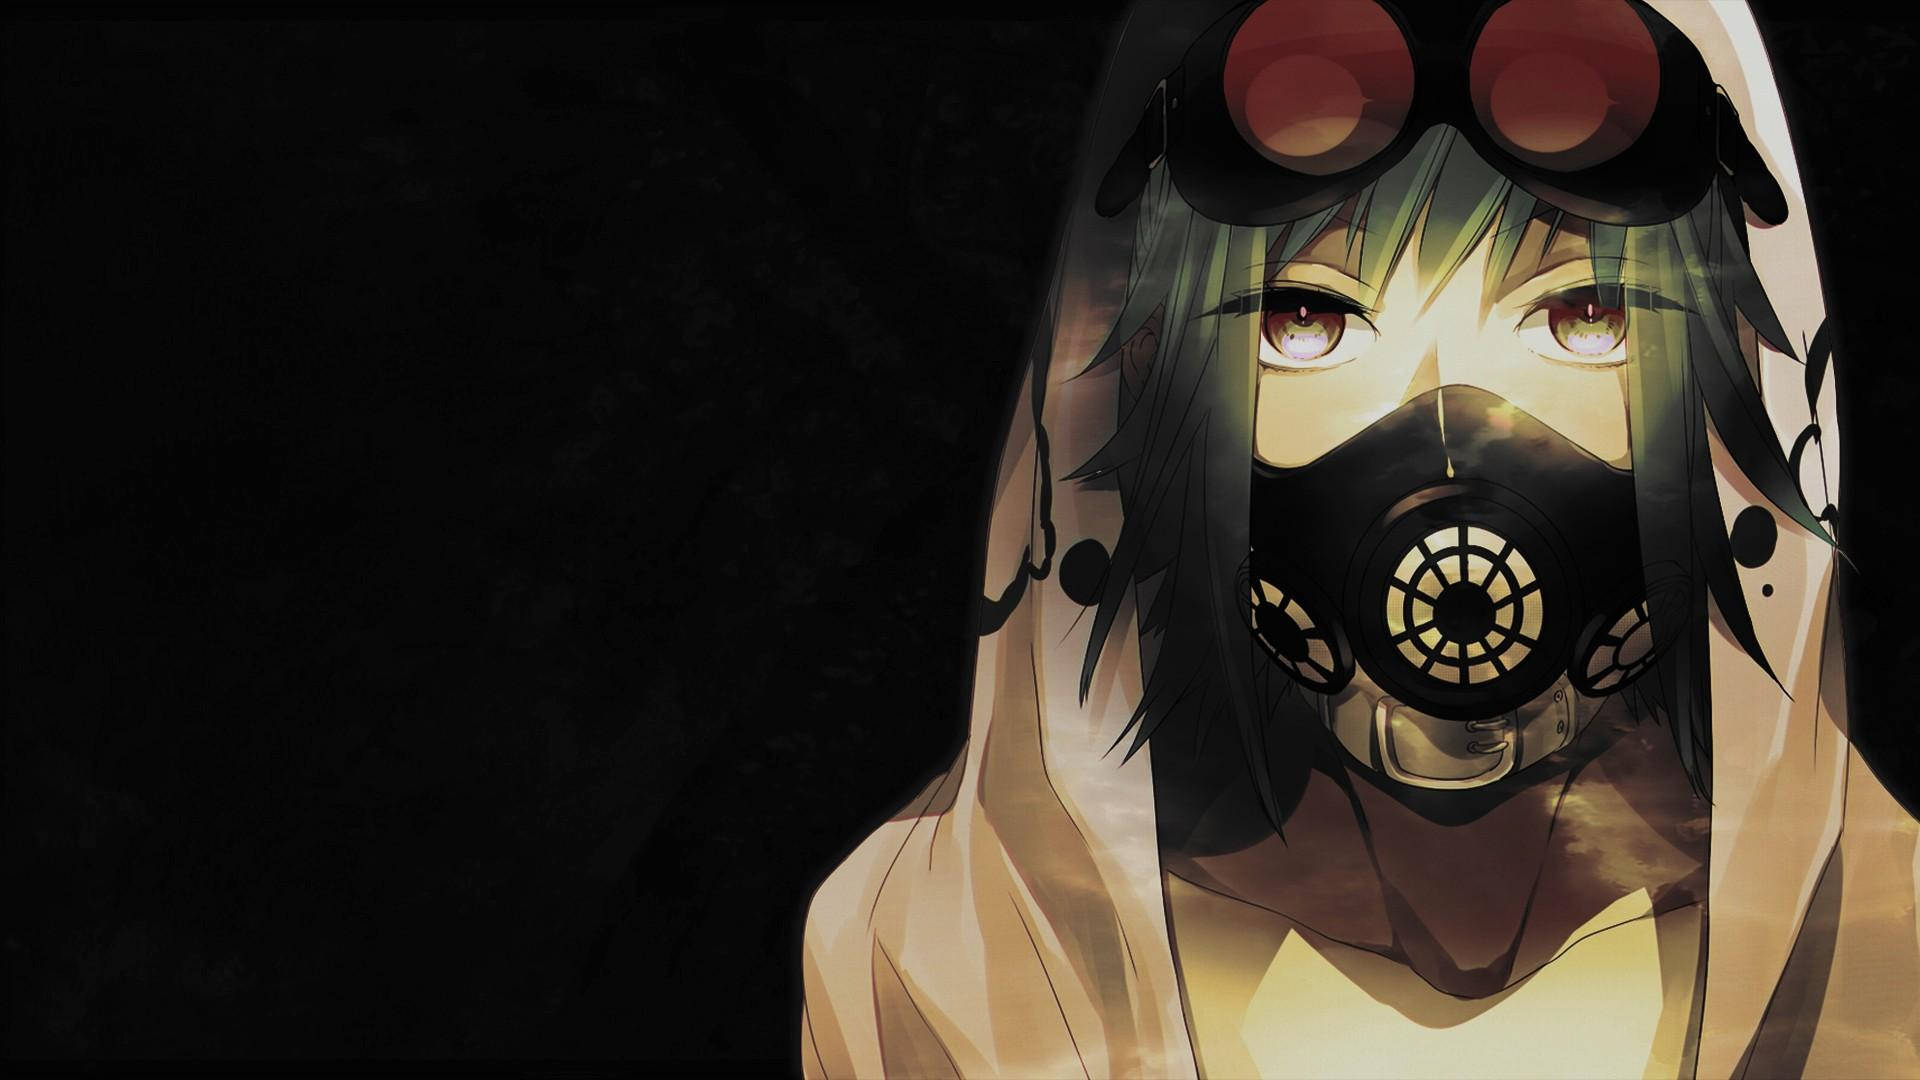 Digital Anime Girl With Gas Mask Wallpaper